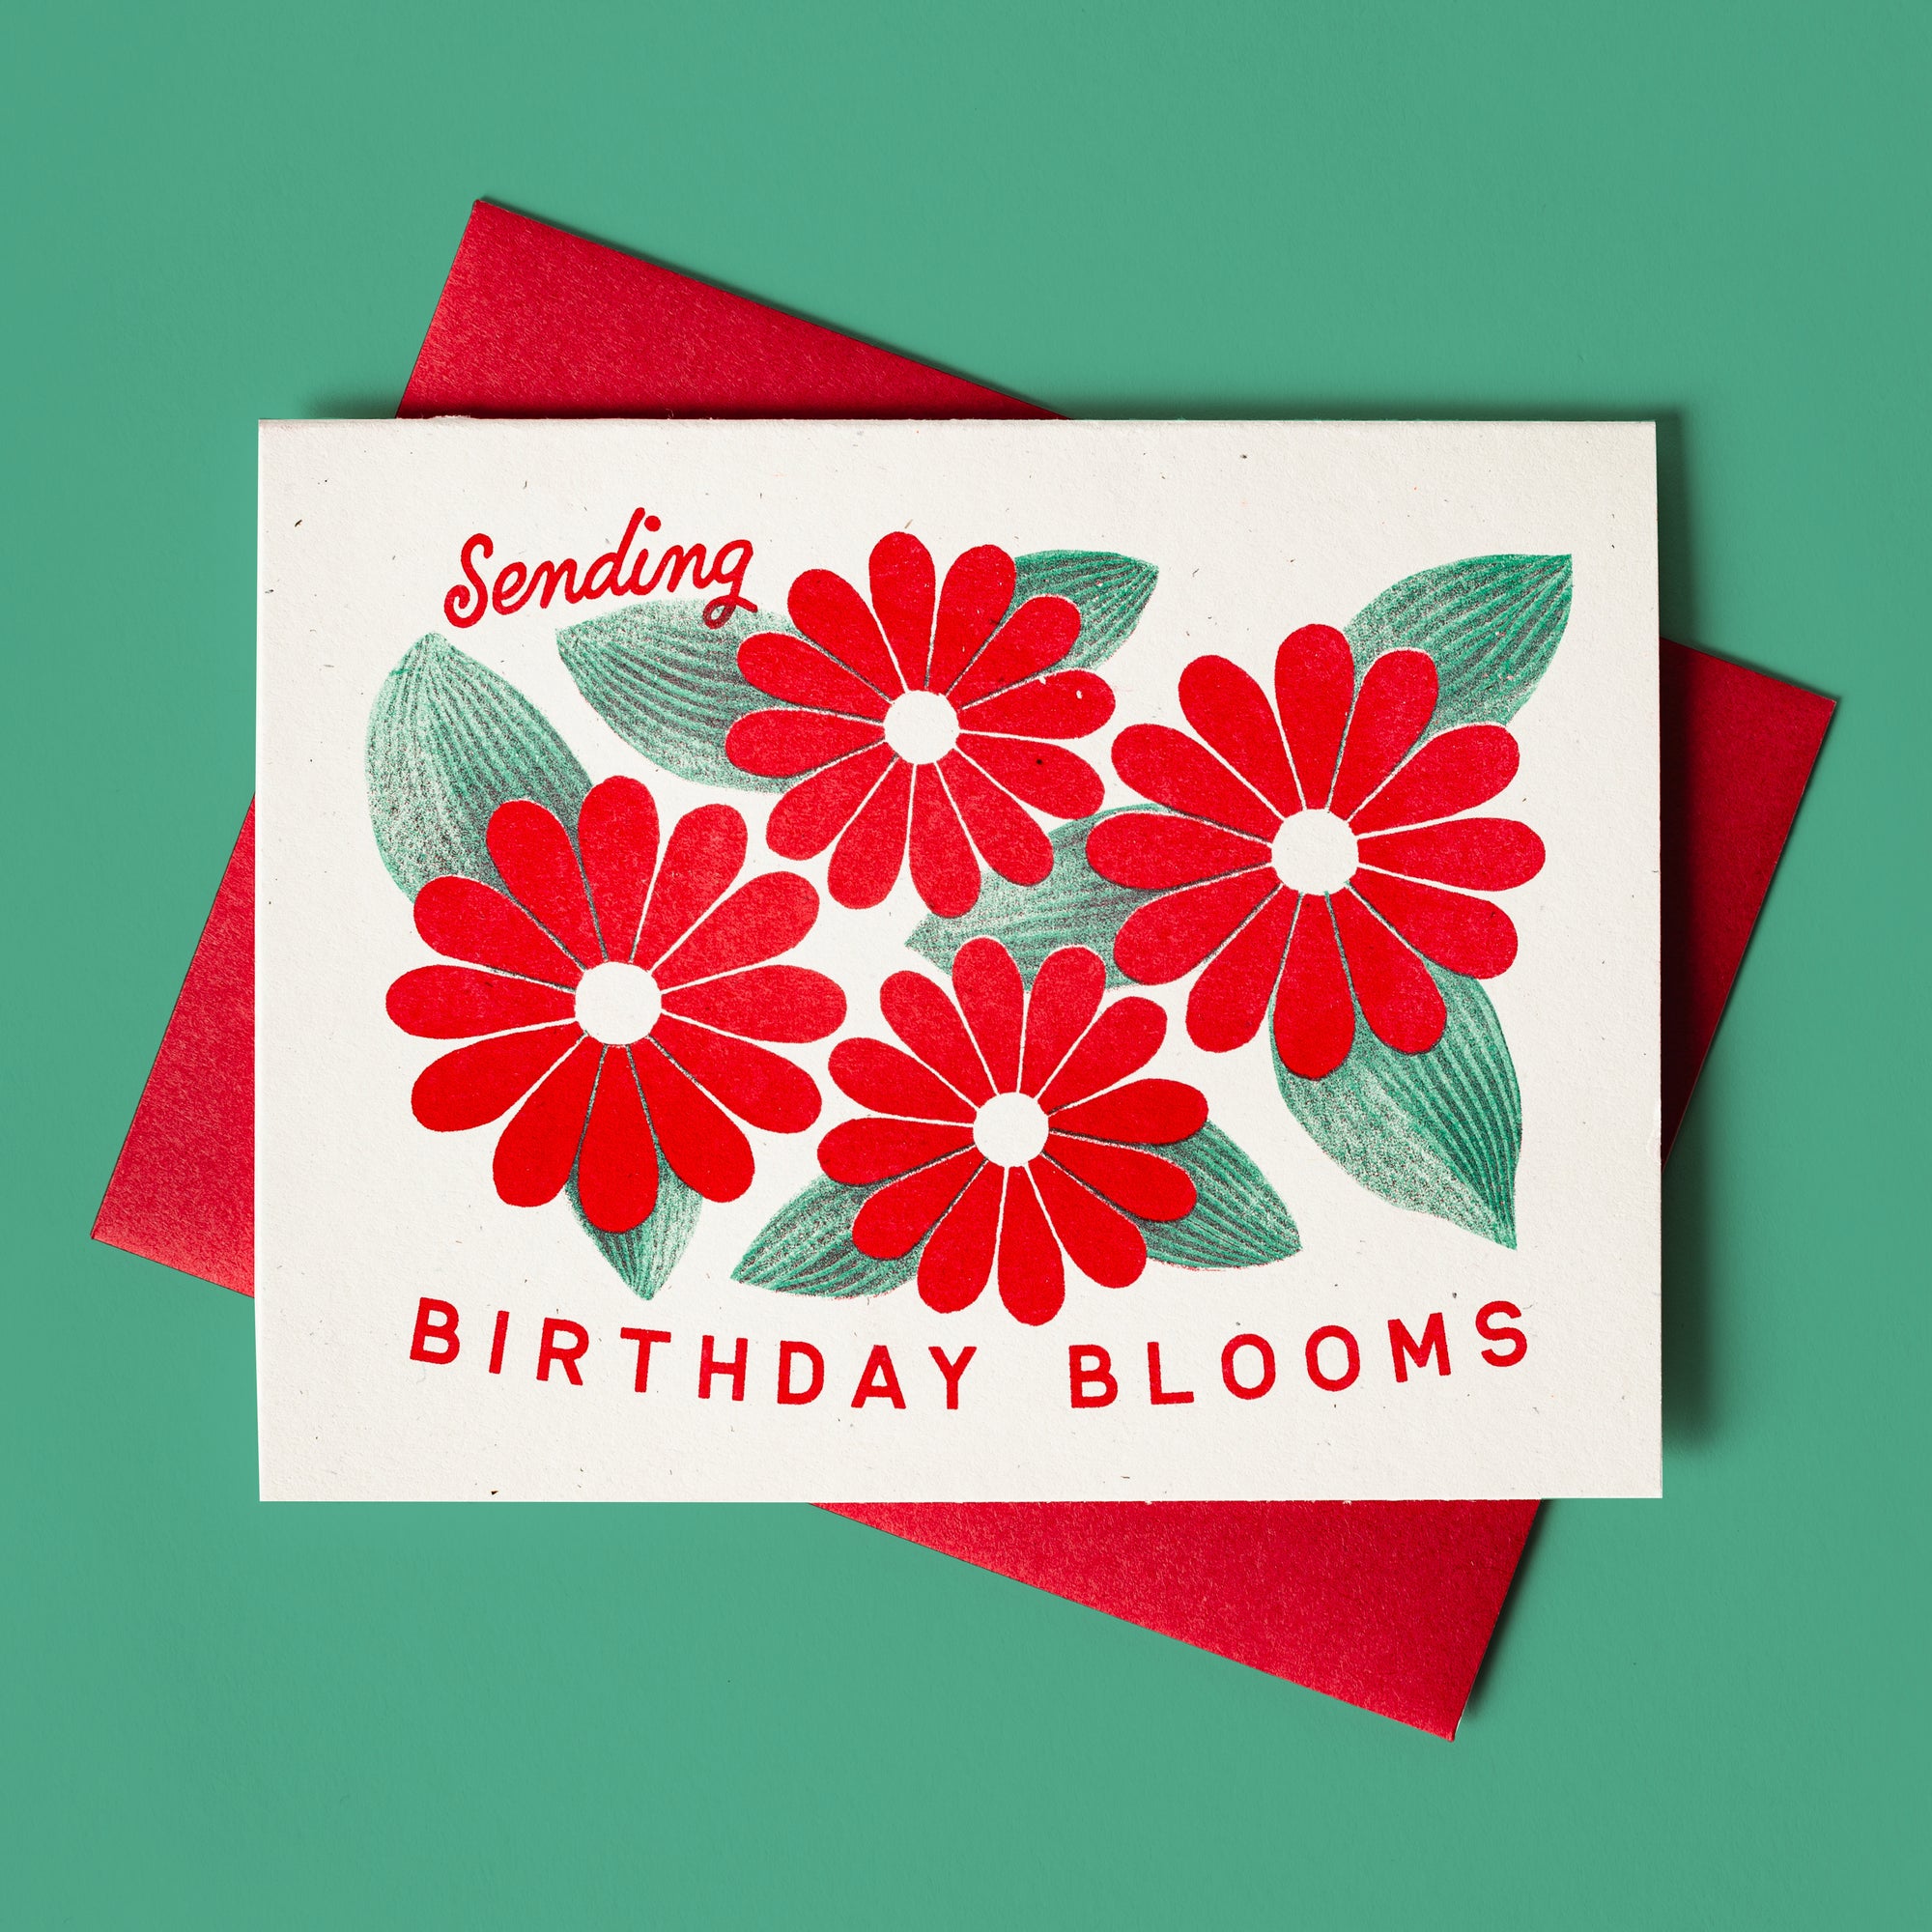 Sending Birthday Blooms - Risograph Card